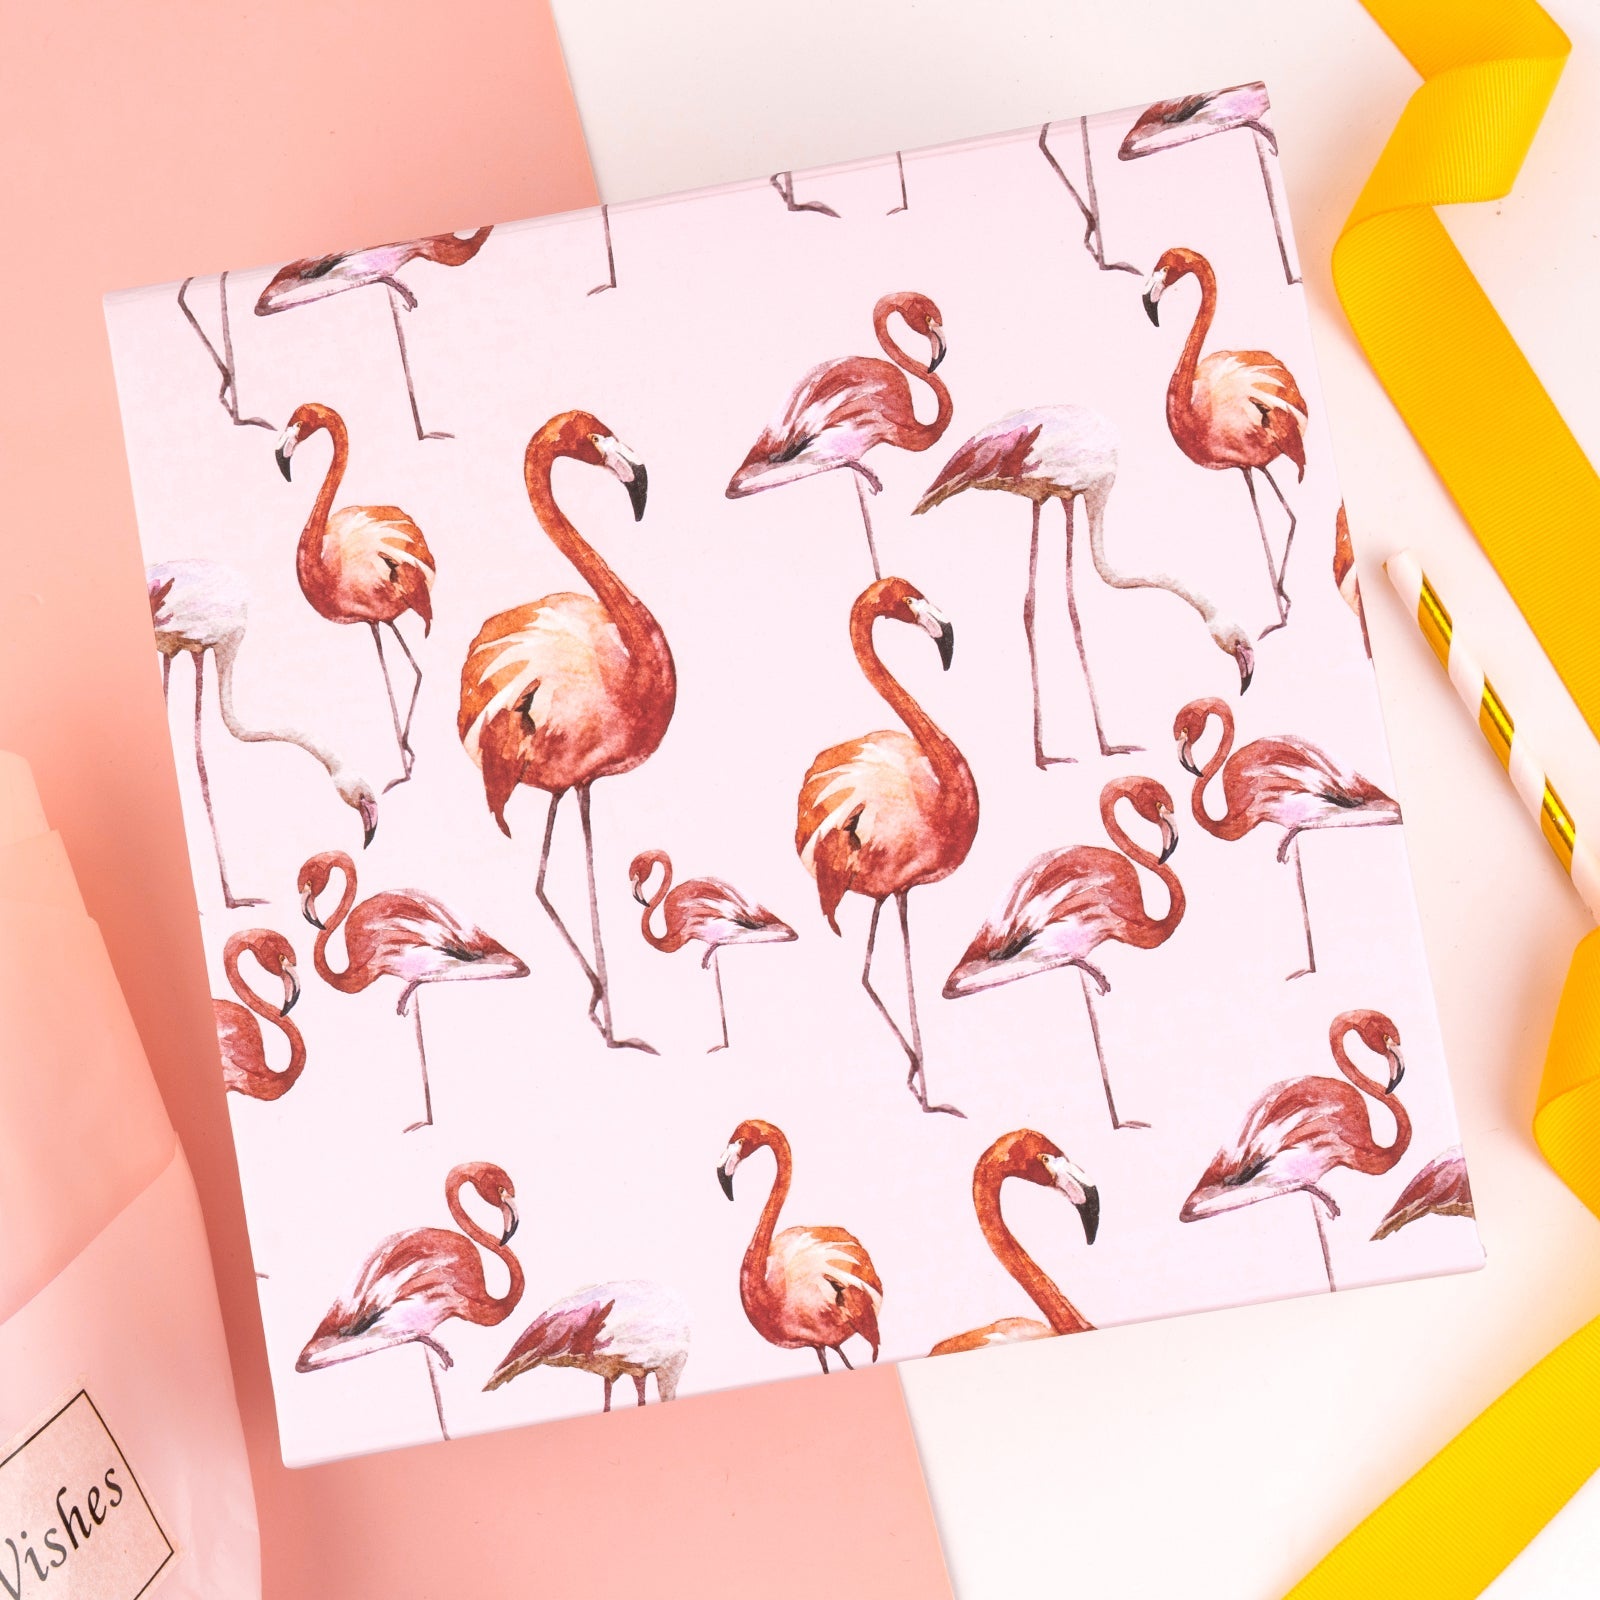 8x8x4 inch Magnetic Closure Box Pink Flamingos